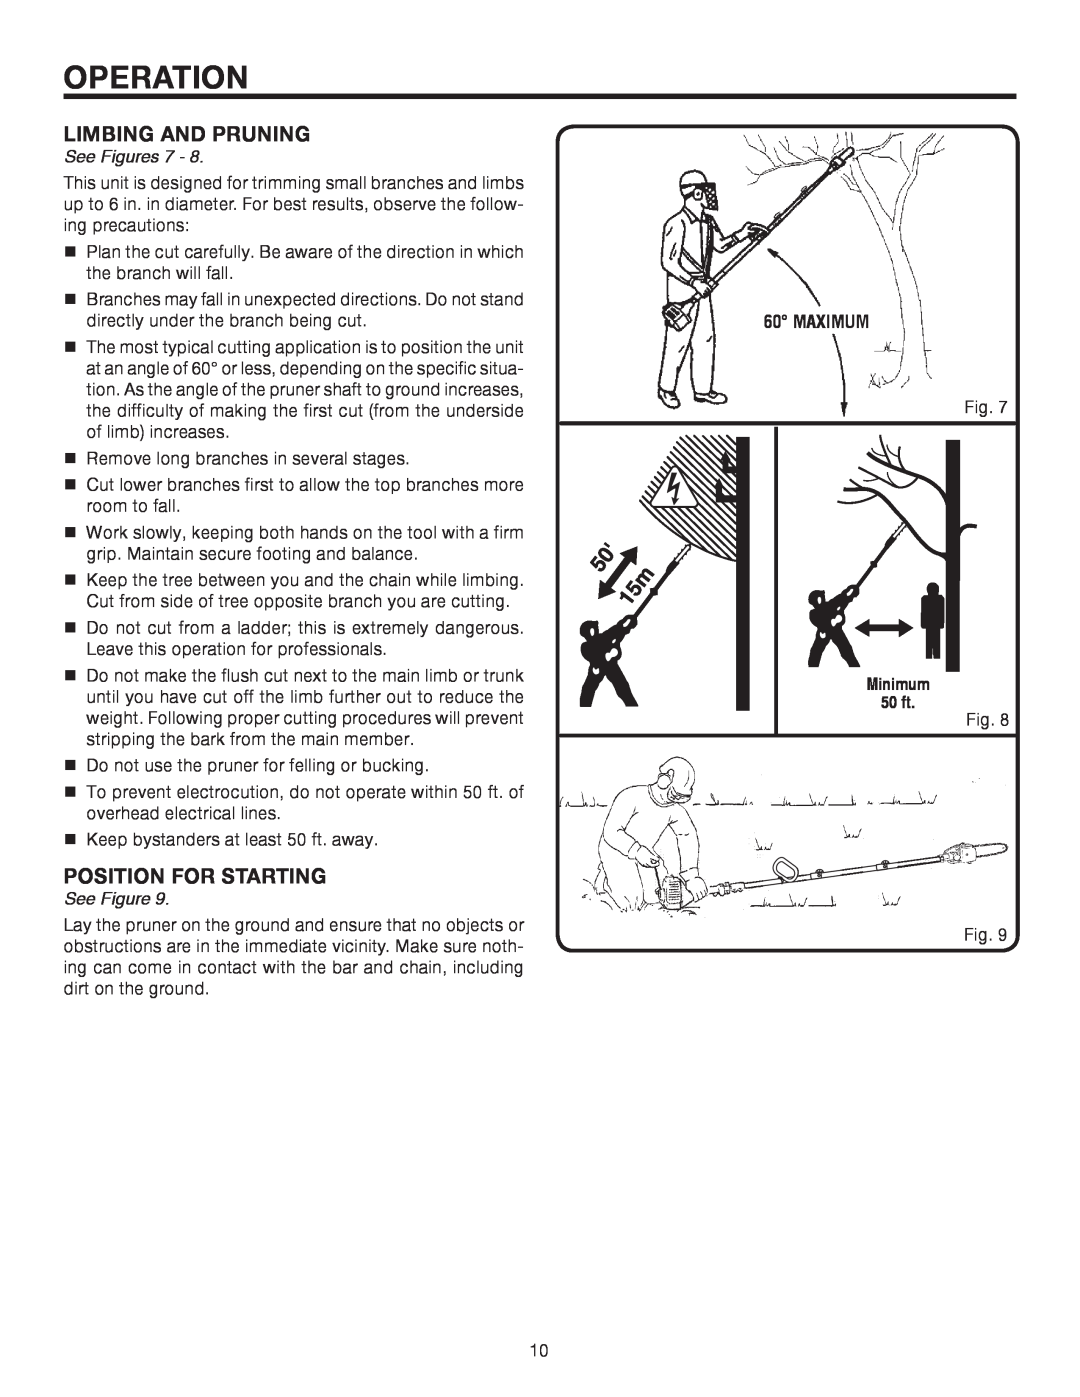 Ryobi UT15520C manual Limbing And Pruning, Position For Starting, See Figures, Maximum, Operation, Minimum 50 ft 